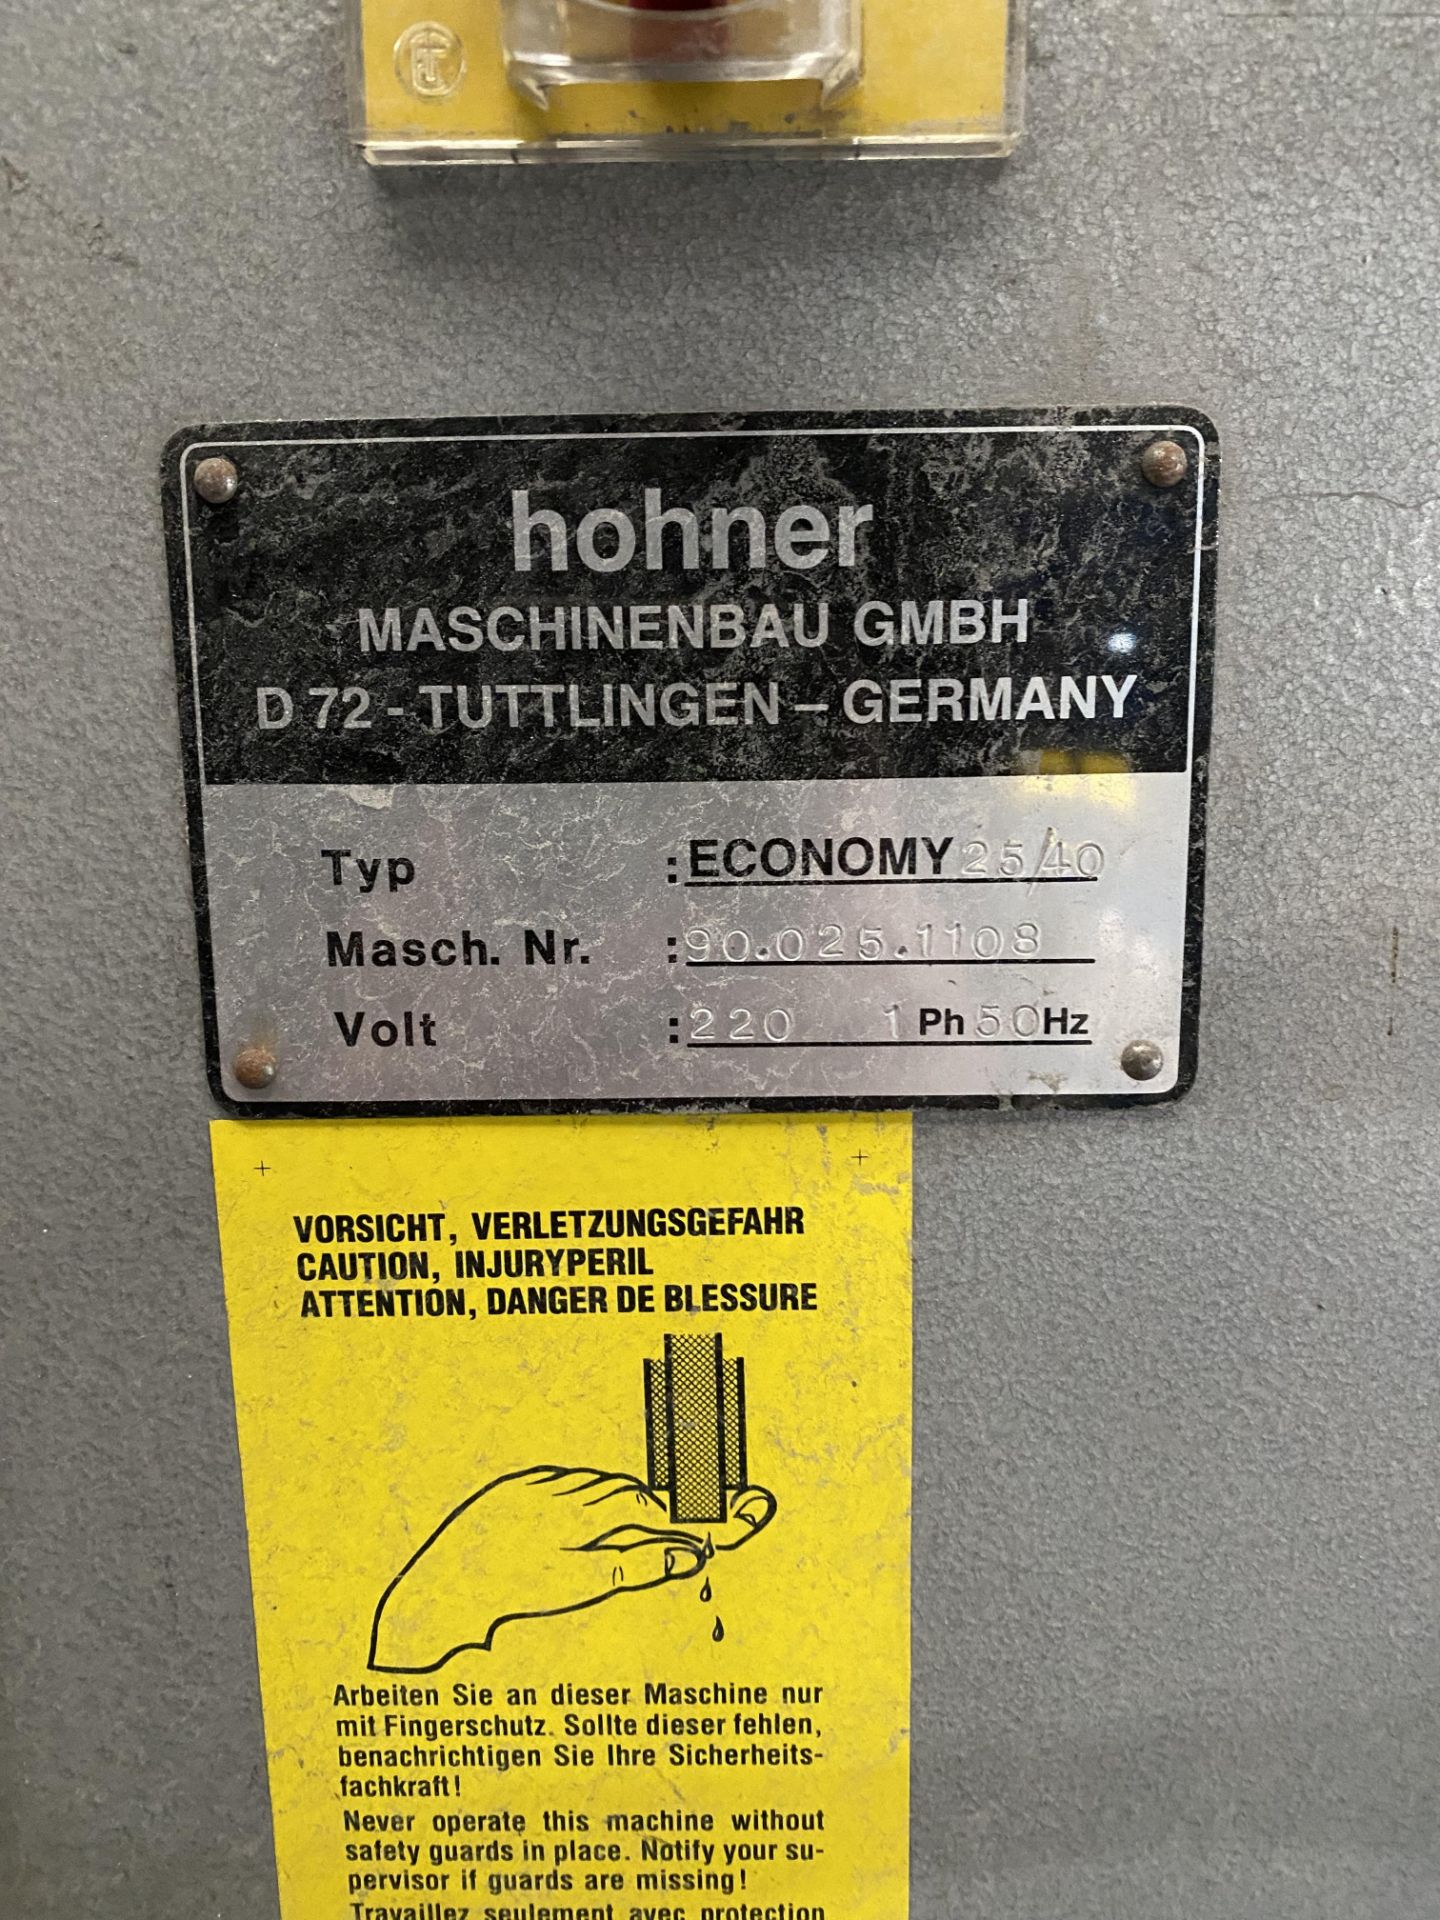 Hohner Economy 25/40 wire stitcher, serial no. 90.025.1108 - Image 2 of 5